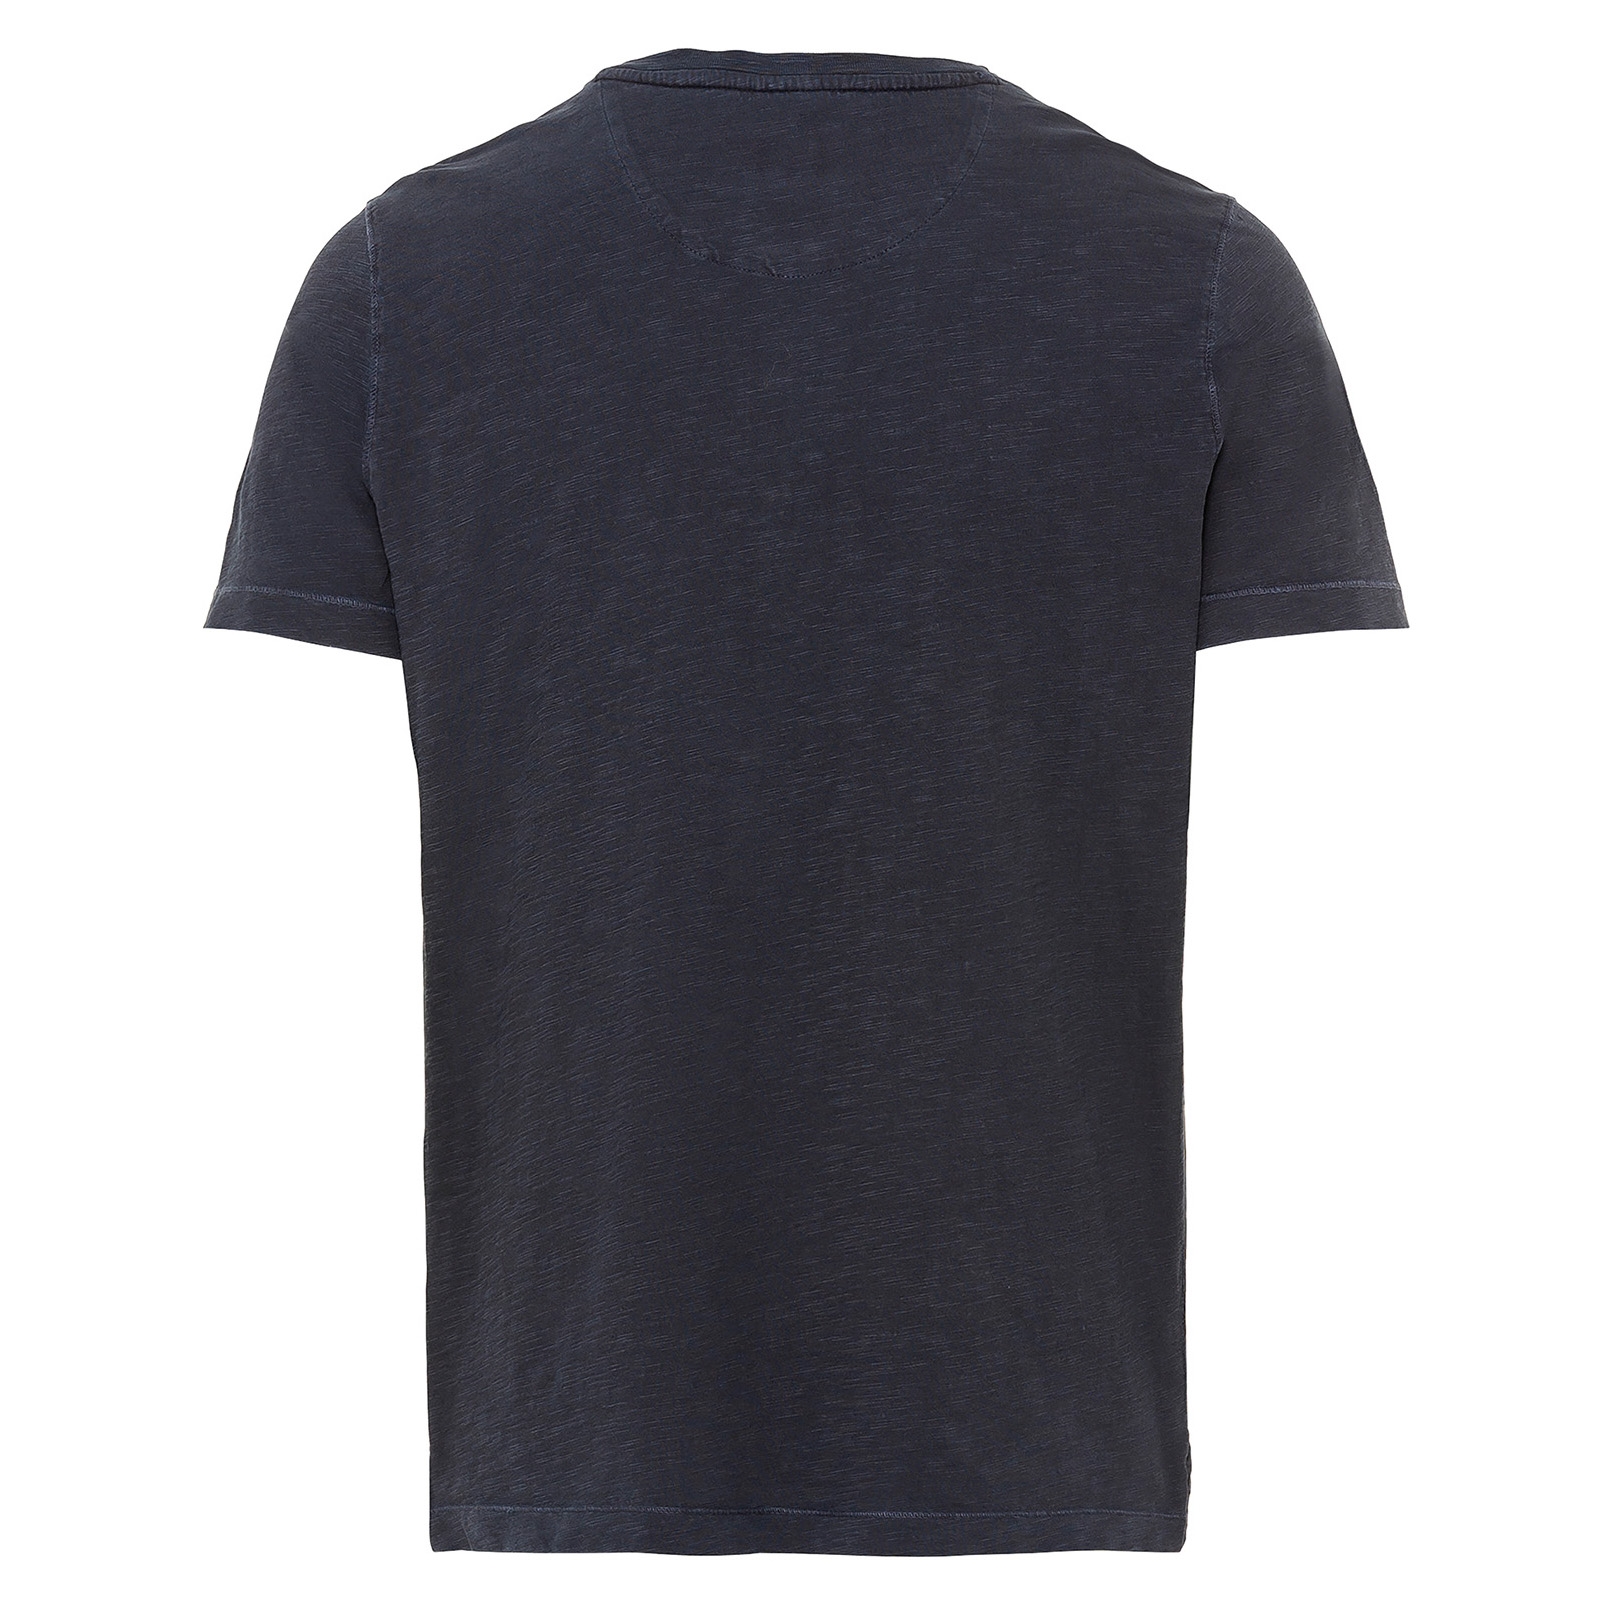 Camel active Herren Henley T-Shirt Shirt kurzarm Knopfleiste marine blau 9T04409474 47